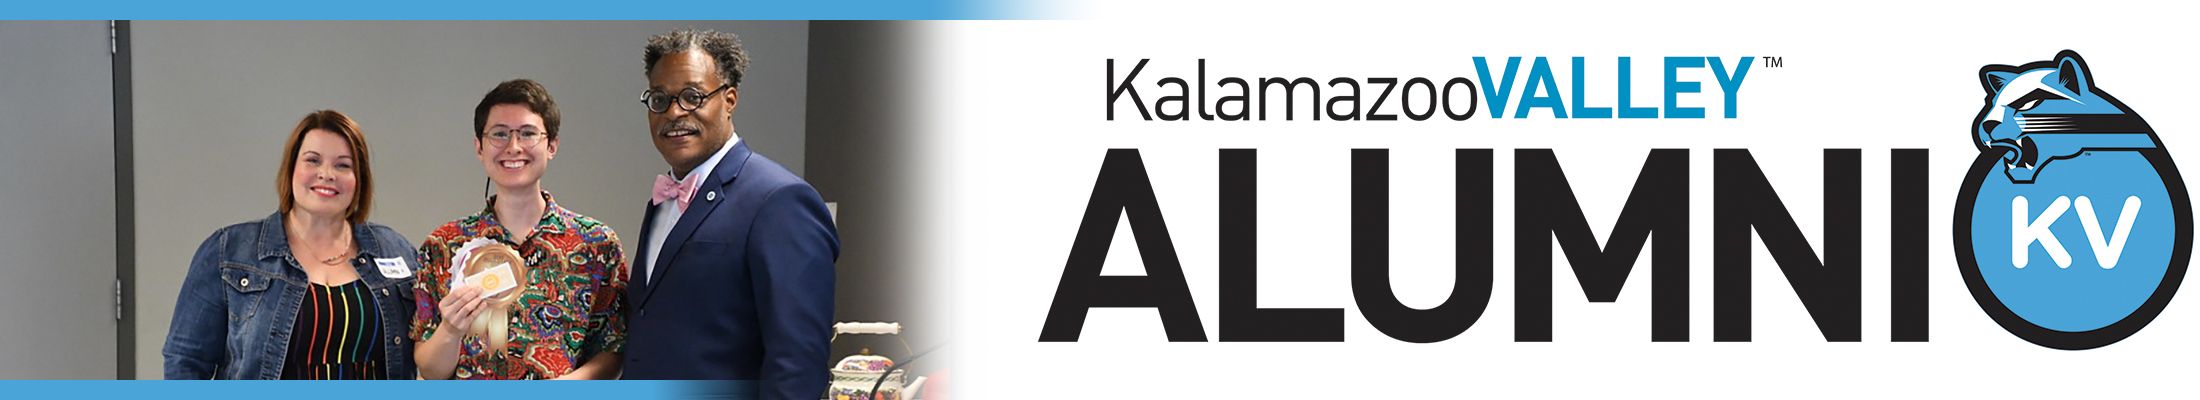 Kalamazoo Valley Alumni